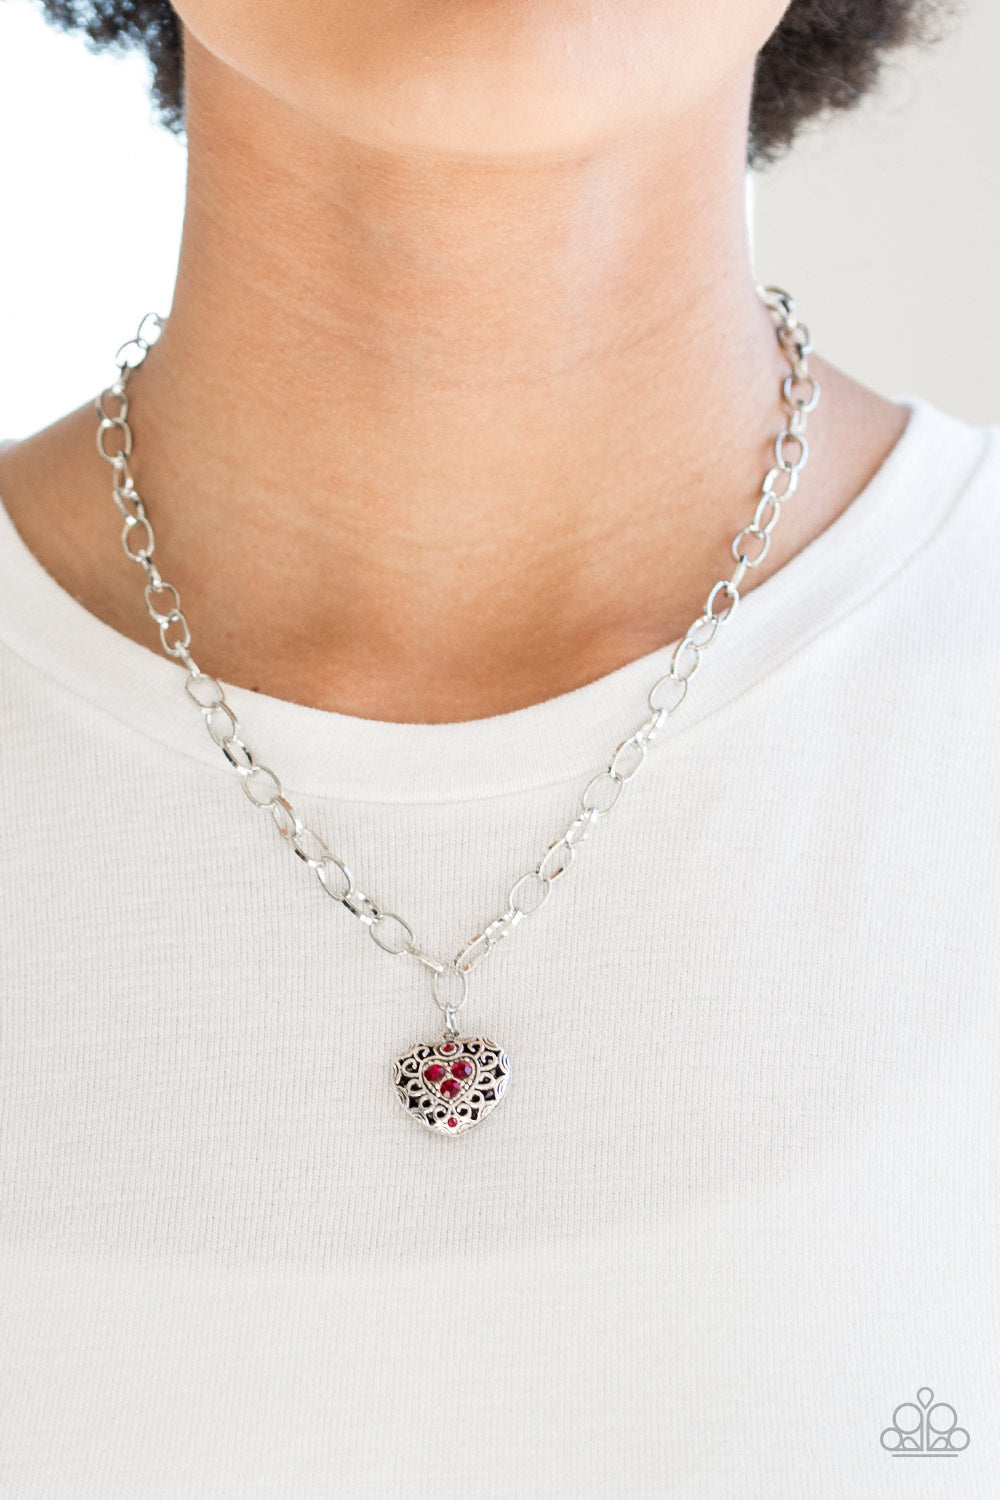 Paparazzi No Love Lost - Red Rhinestones - Silver Locket Heart - Necklace & Earrings - $5 Jewelry with Ashley Swint